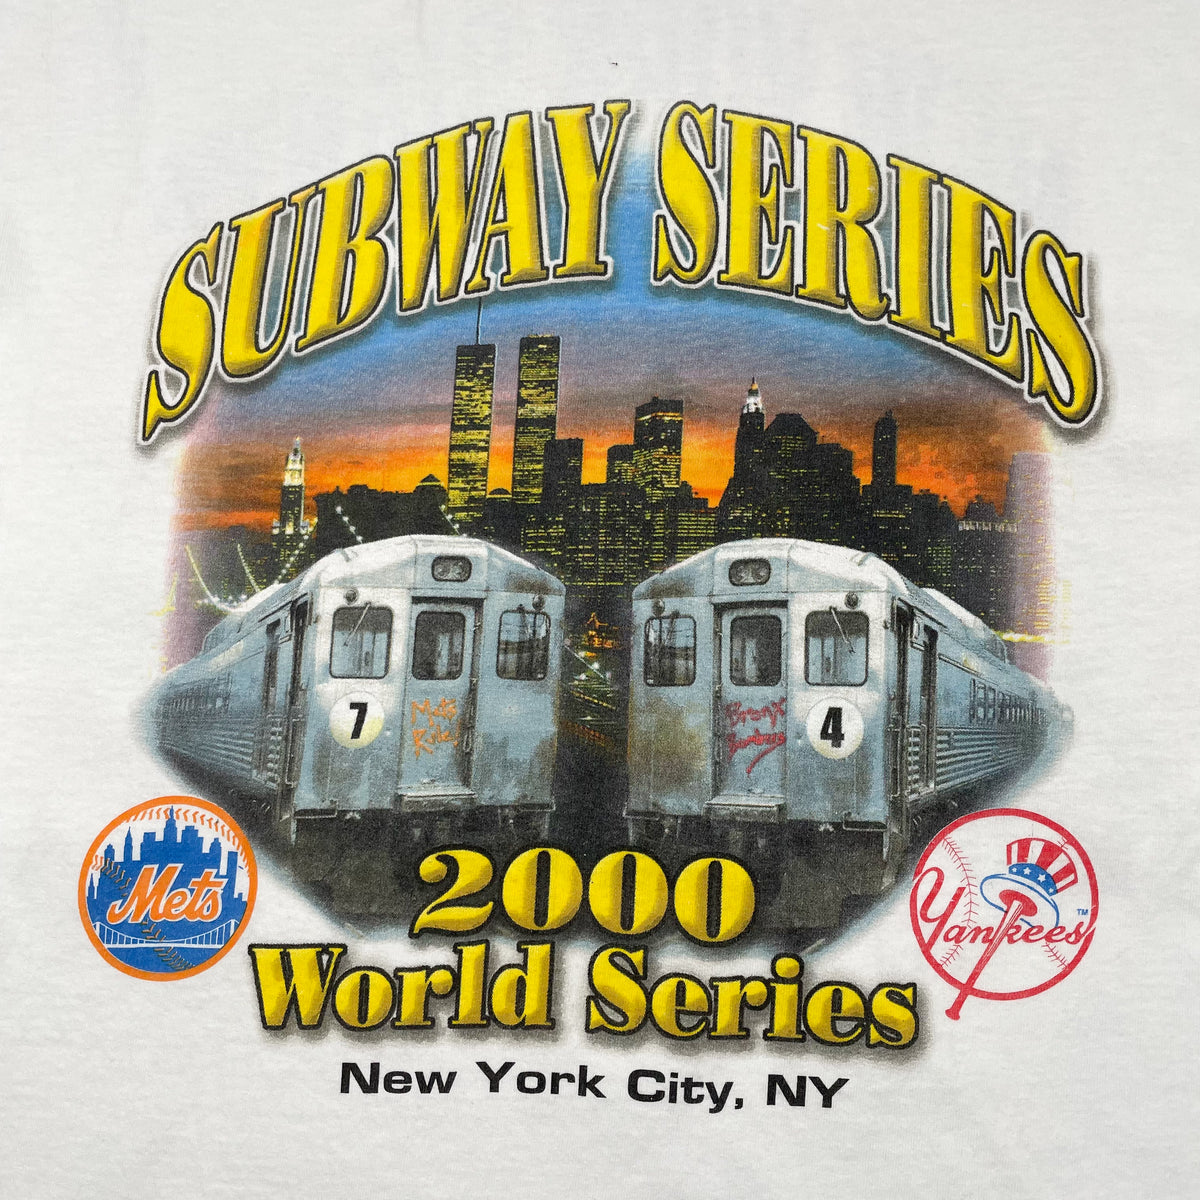 Vintage 200o subway series - Gem